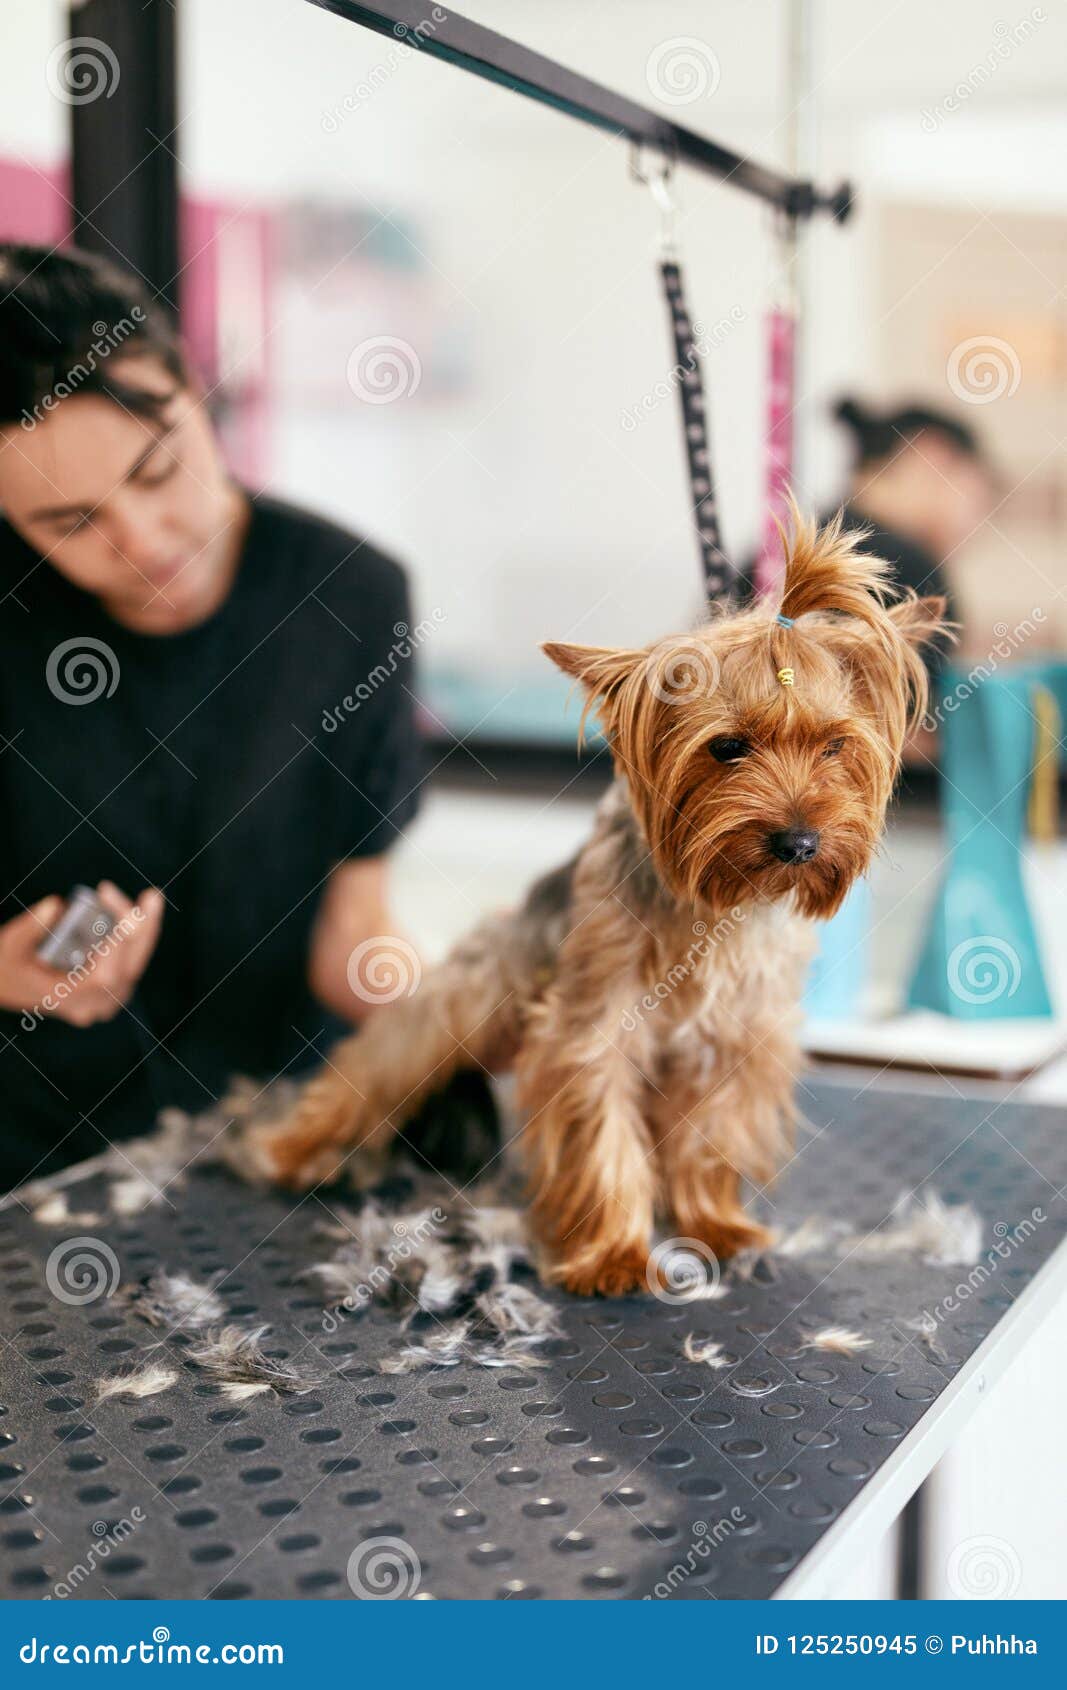 salon puppy